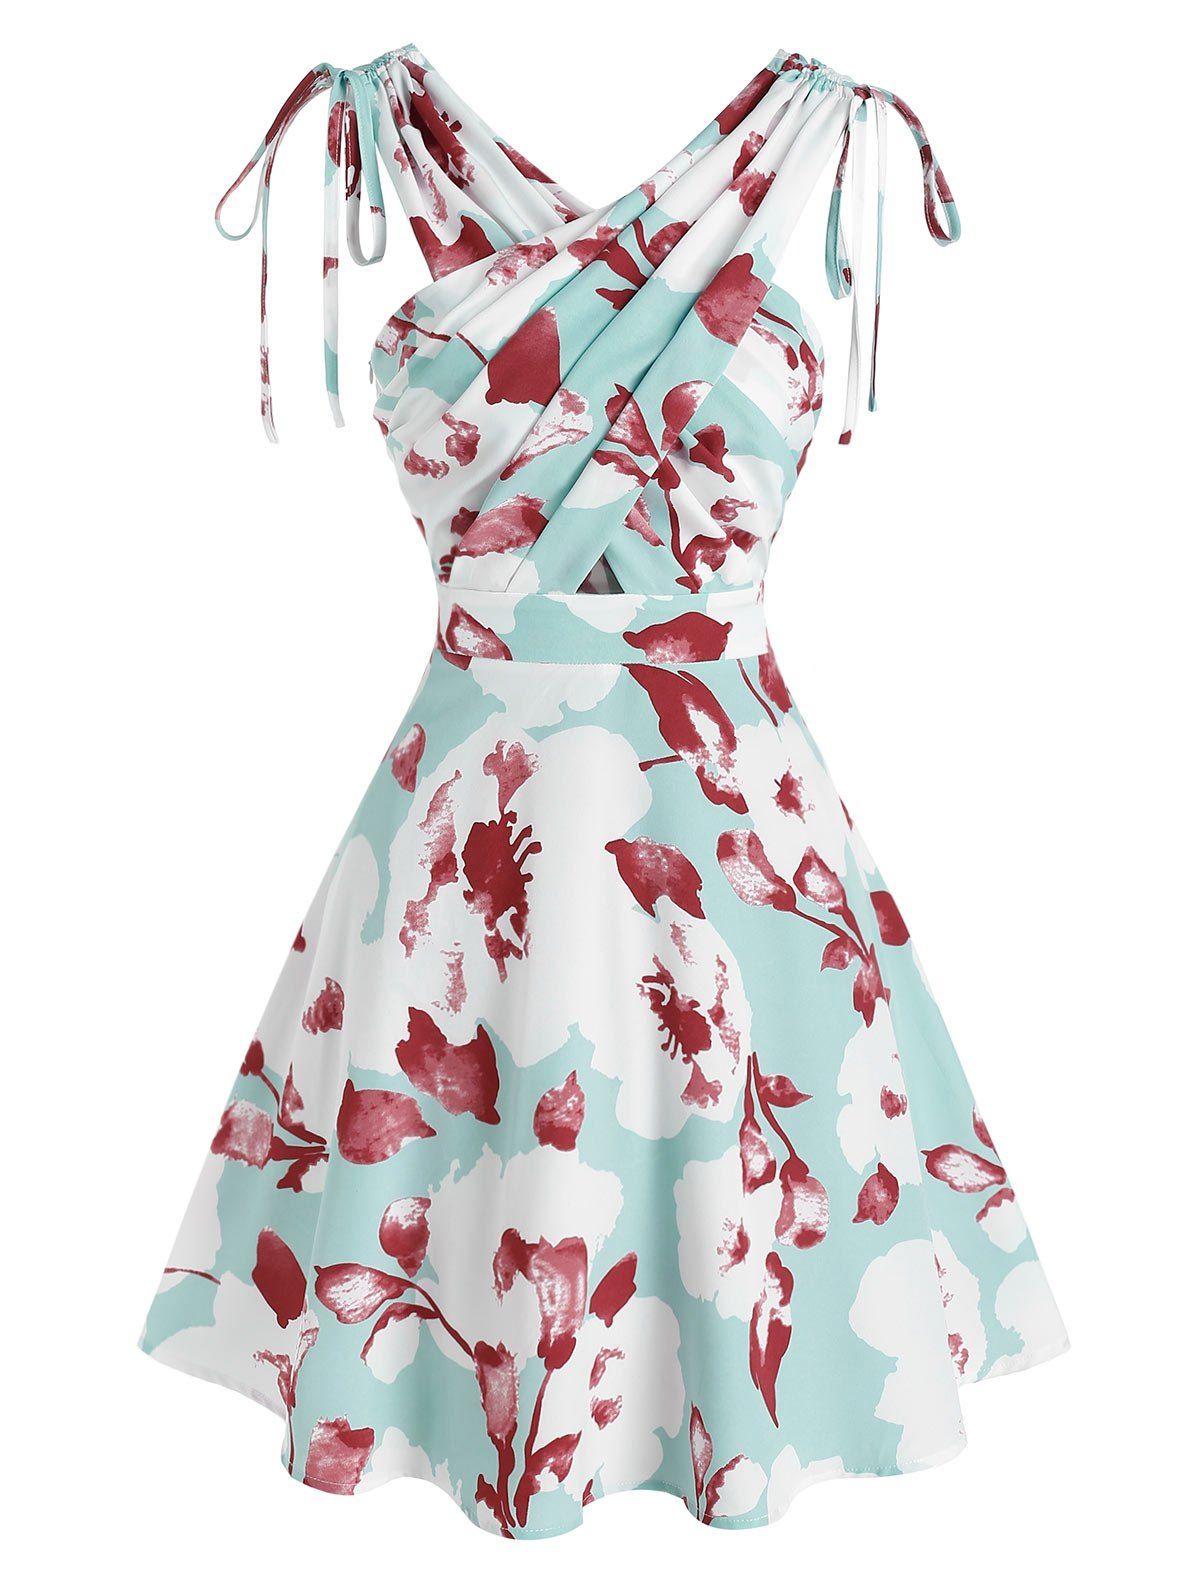 Summer Mini Dress Crisscross Cinched Tie Floral Print Cut Out Vacation A Line Dress - LIGHT BLUE XL